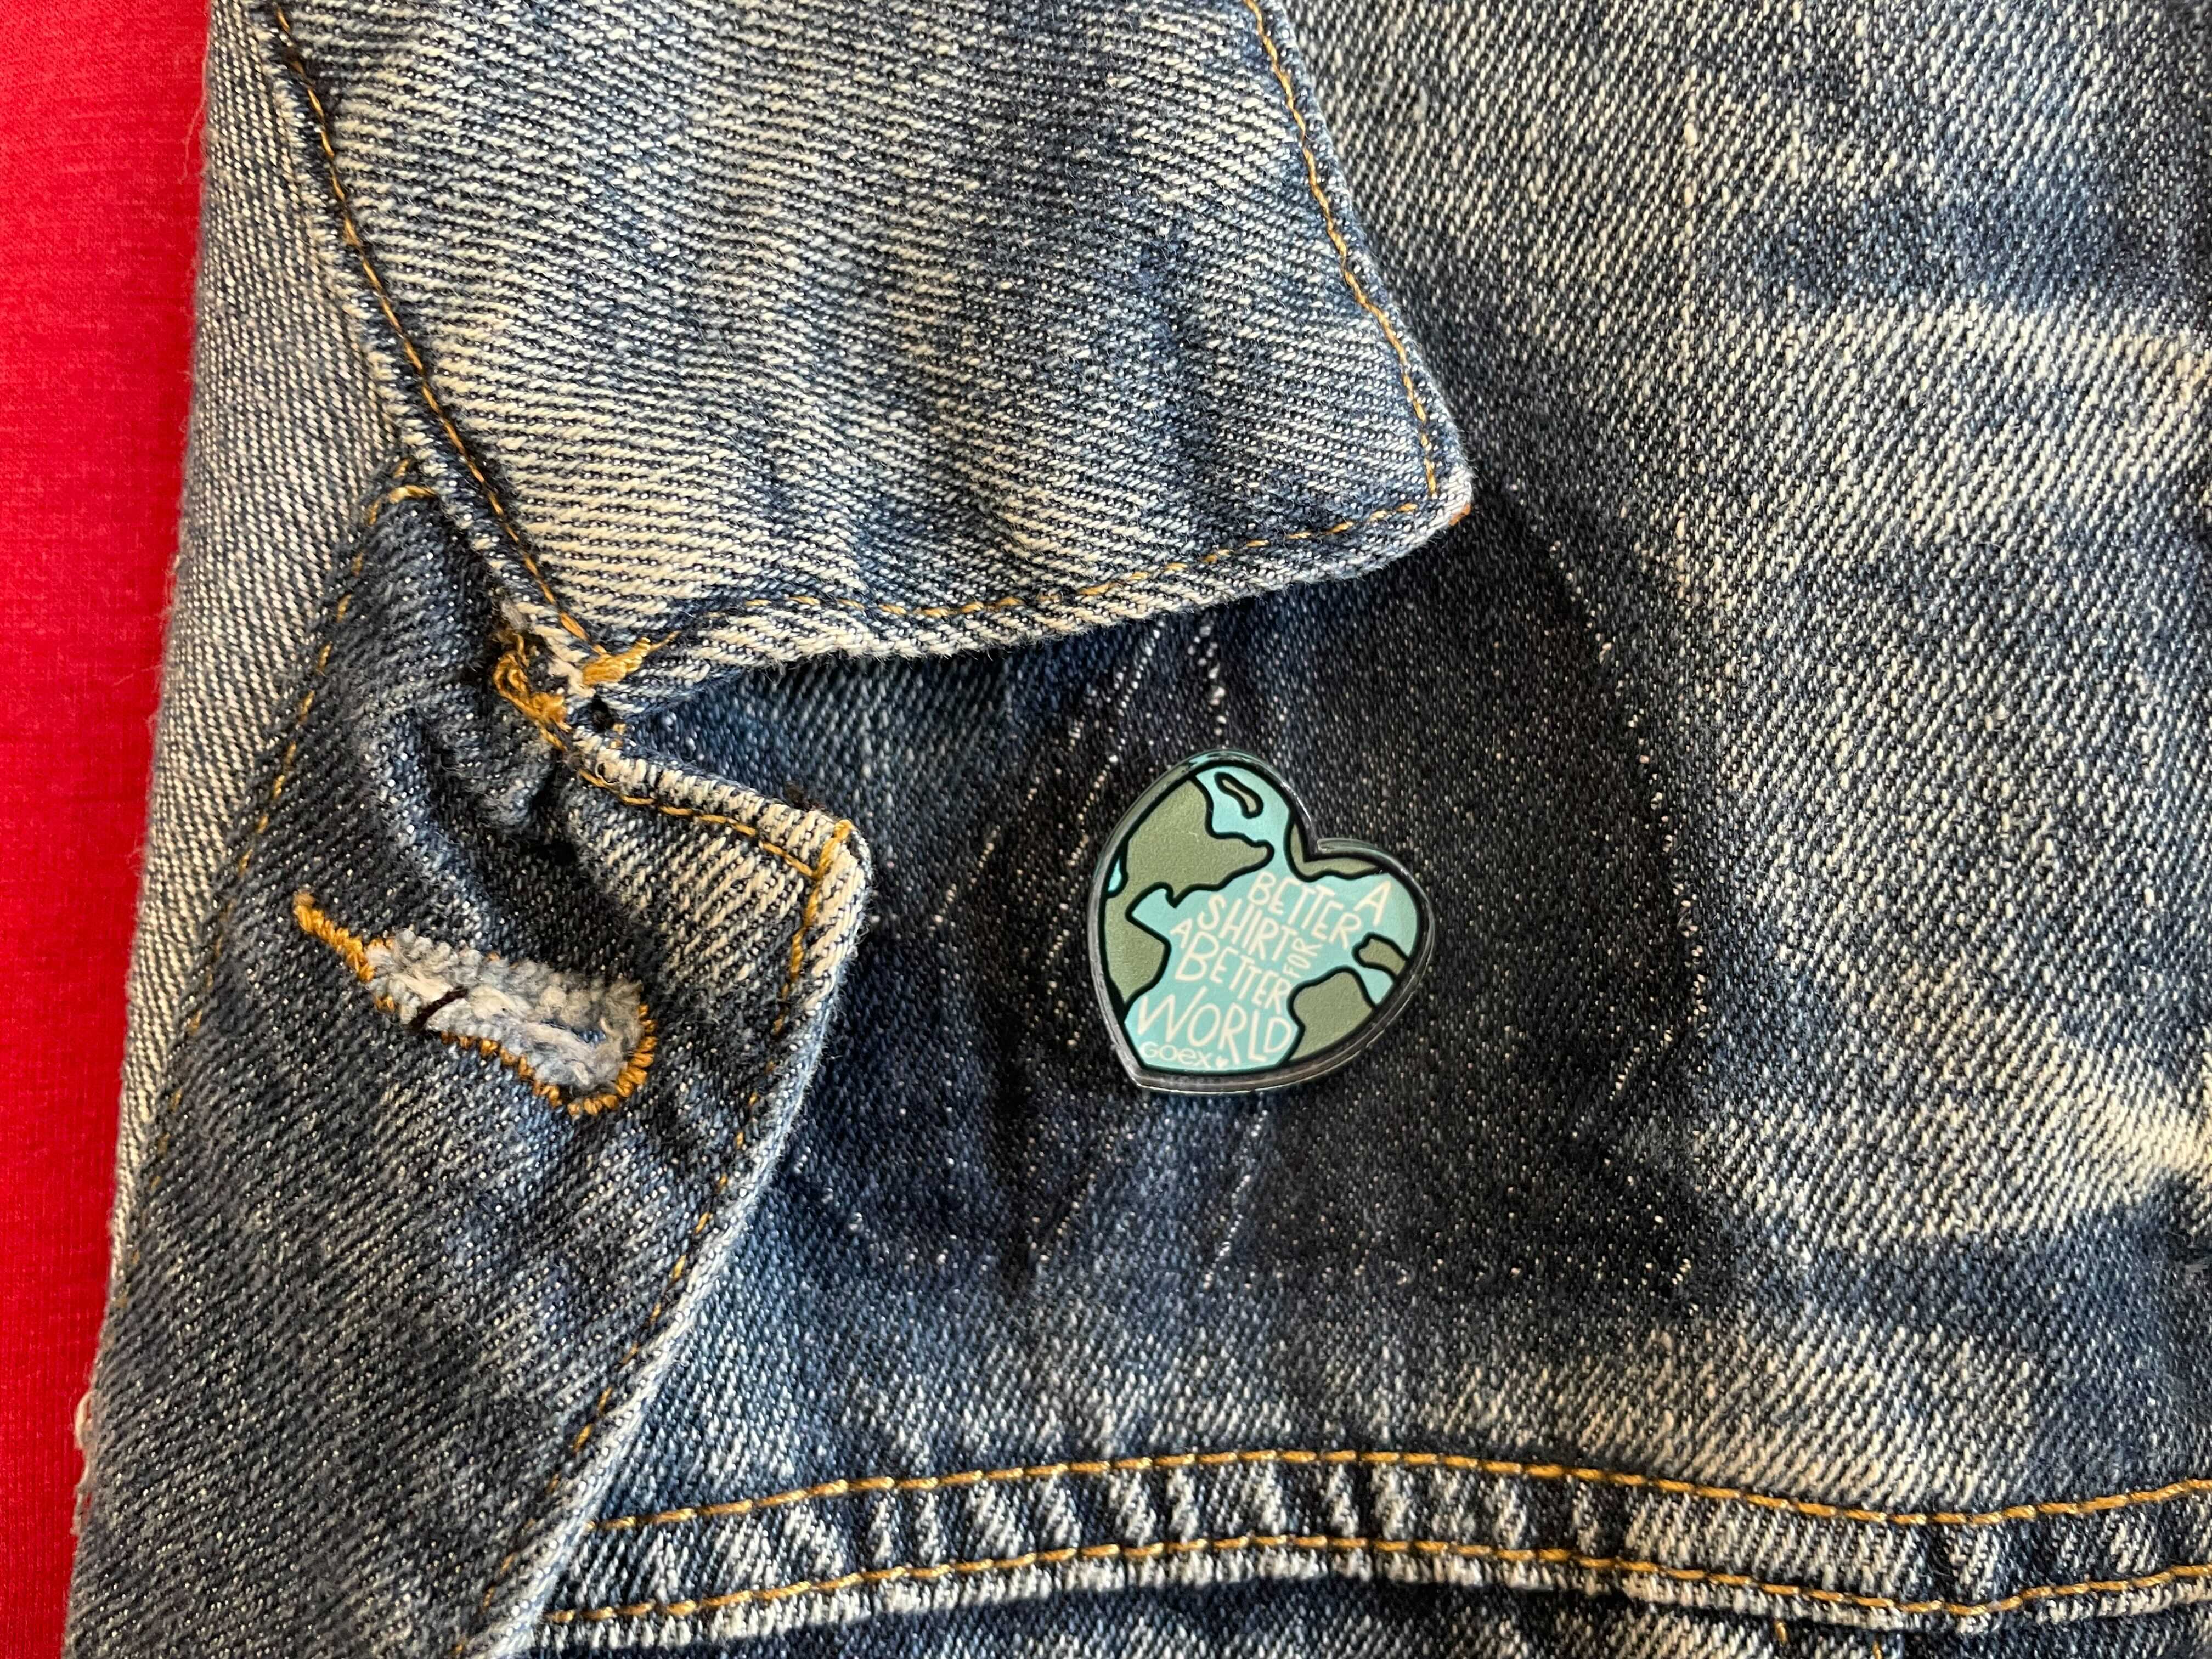 Fair Trade World Pin on Denim Jacket